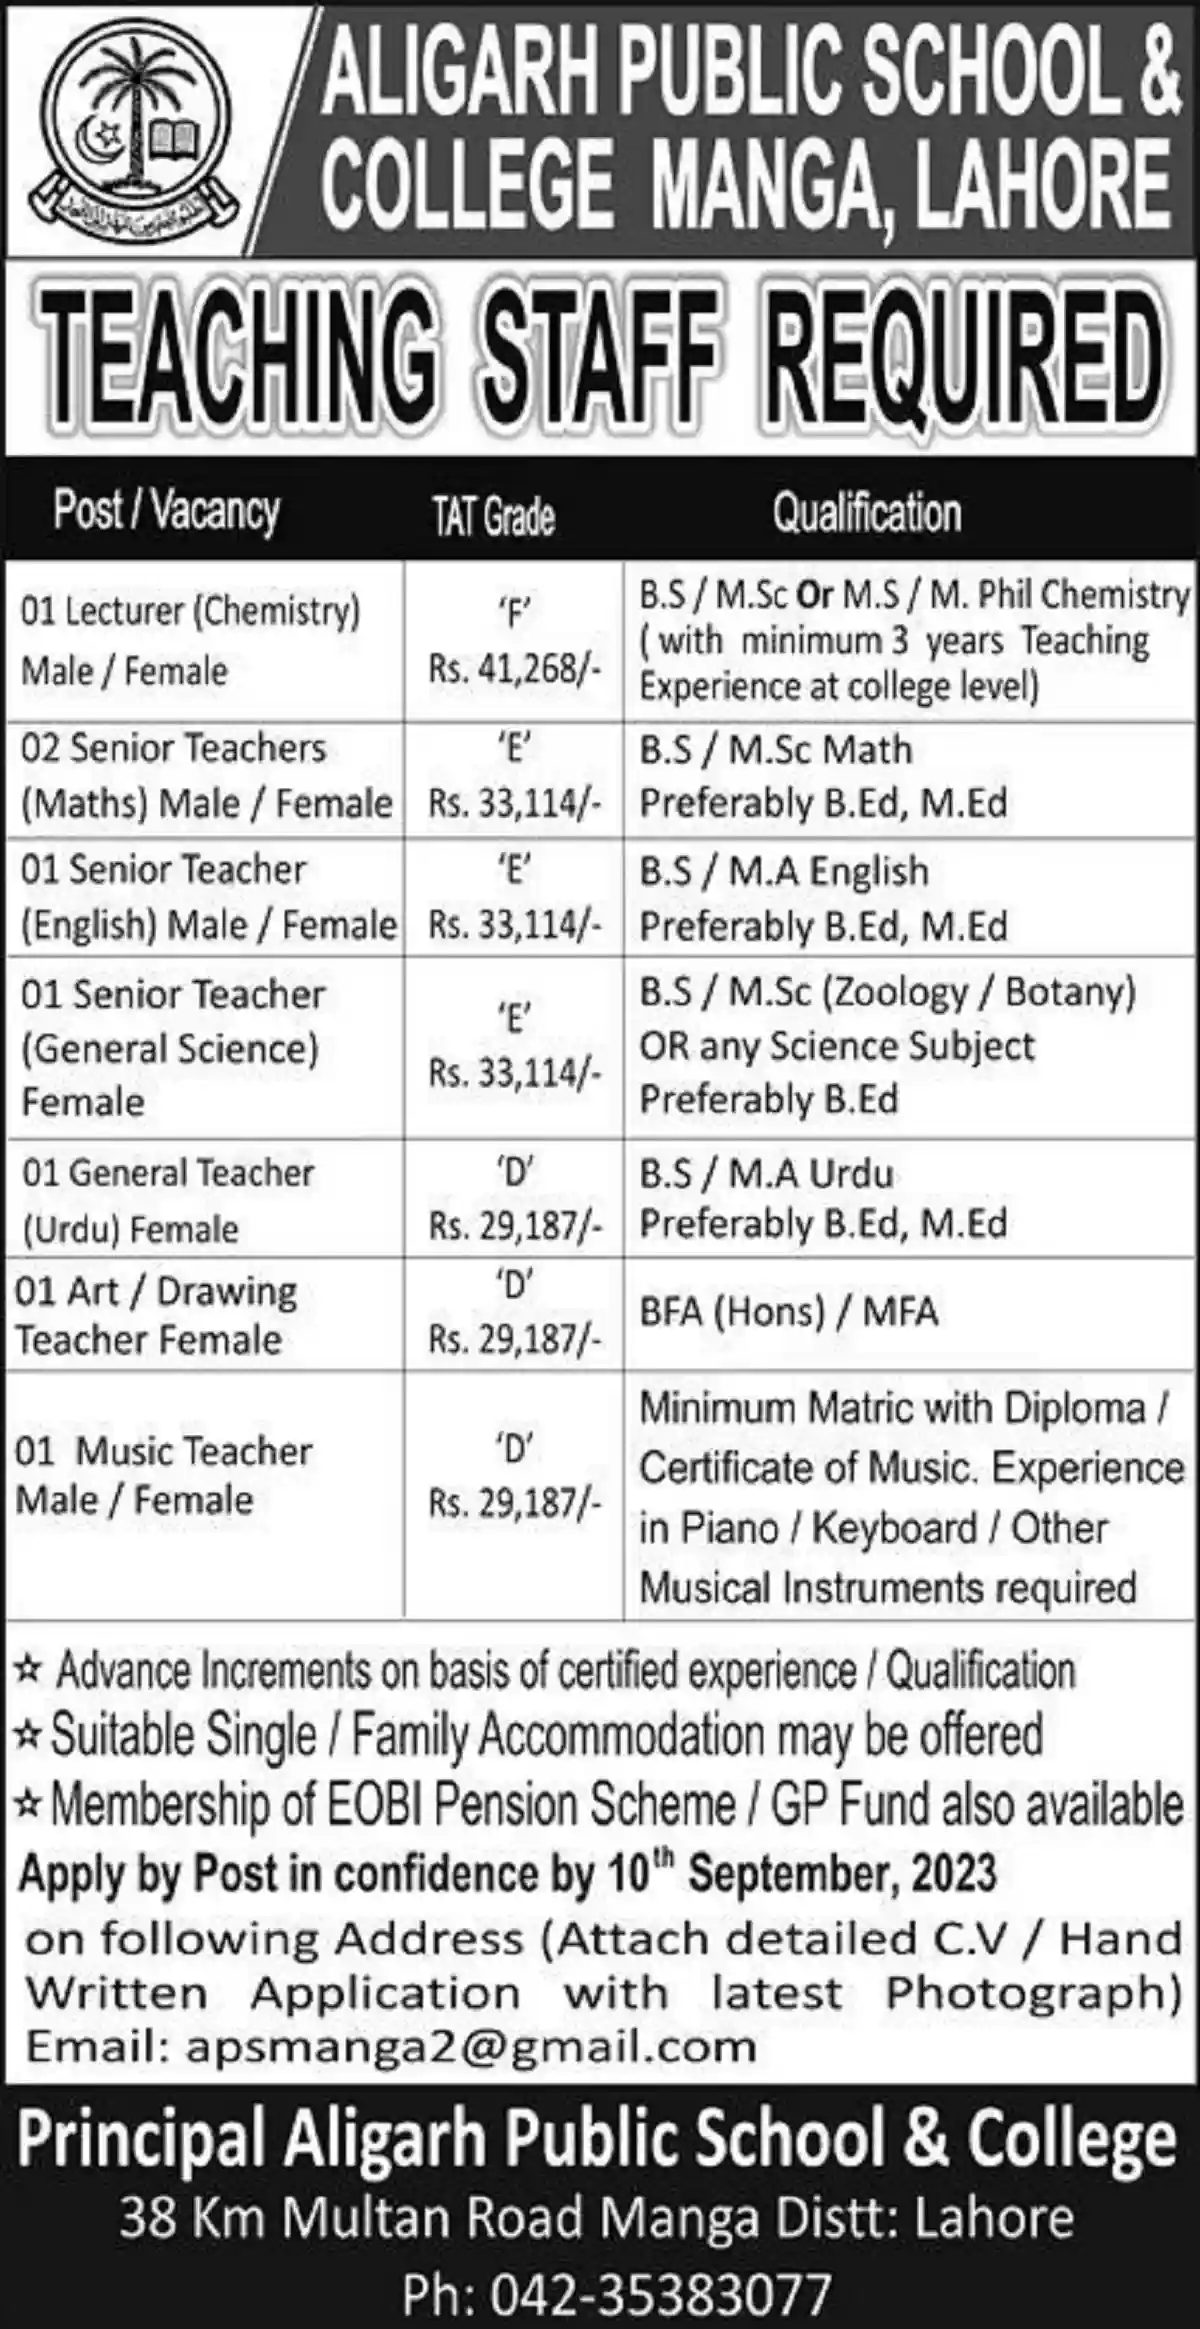 Aligarh Public School and College Teaching Jobs 2023 Manga Lahore